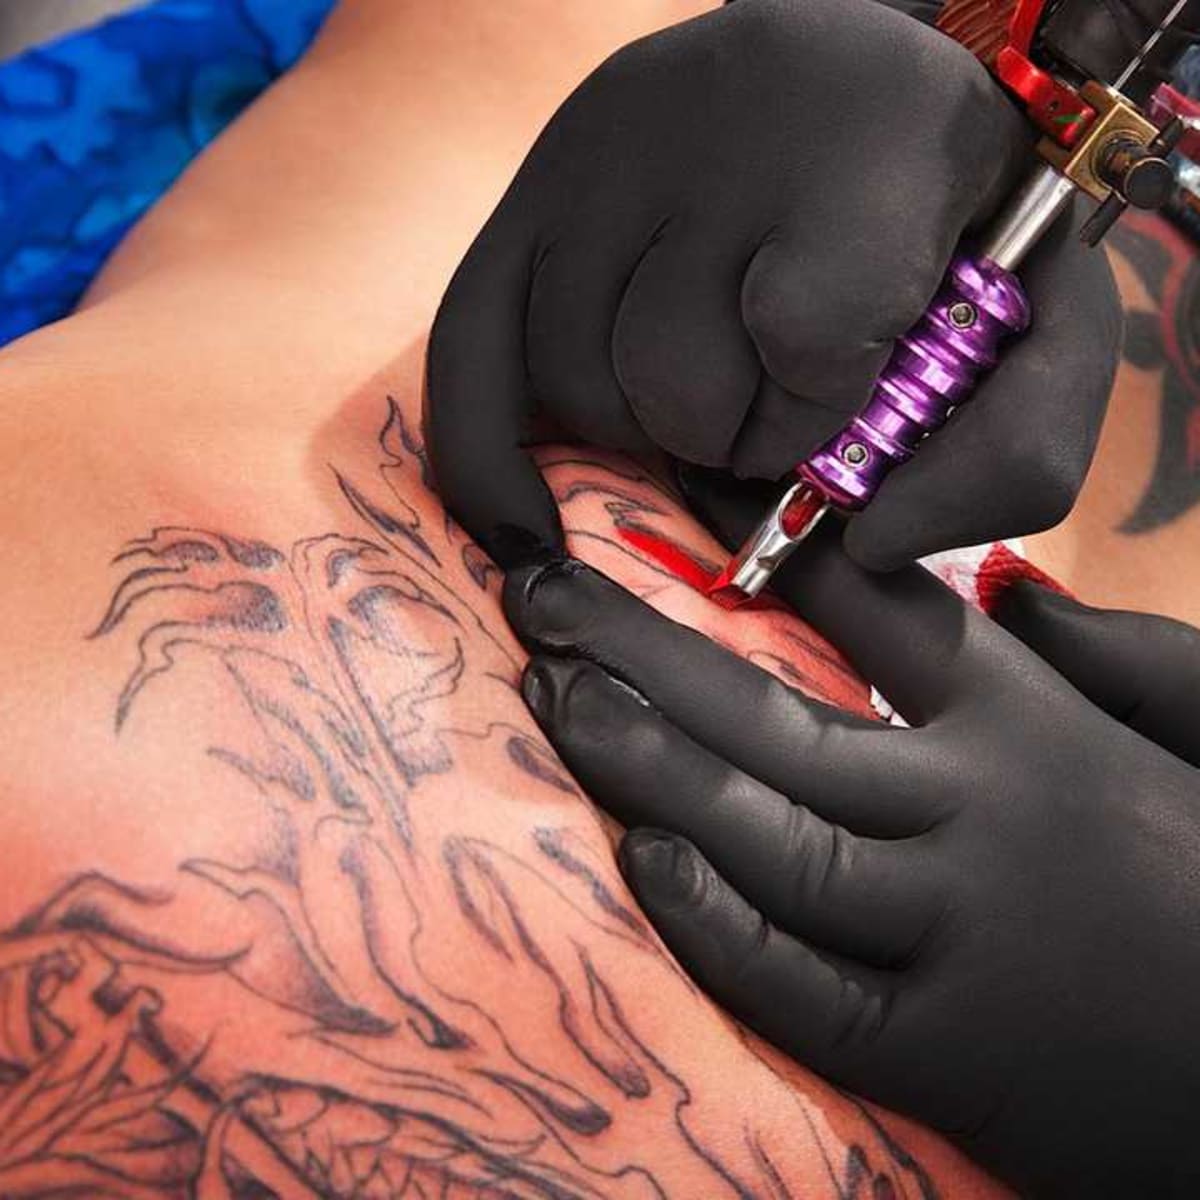 How to Sterilize a Tattoo Needle - Howcast